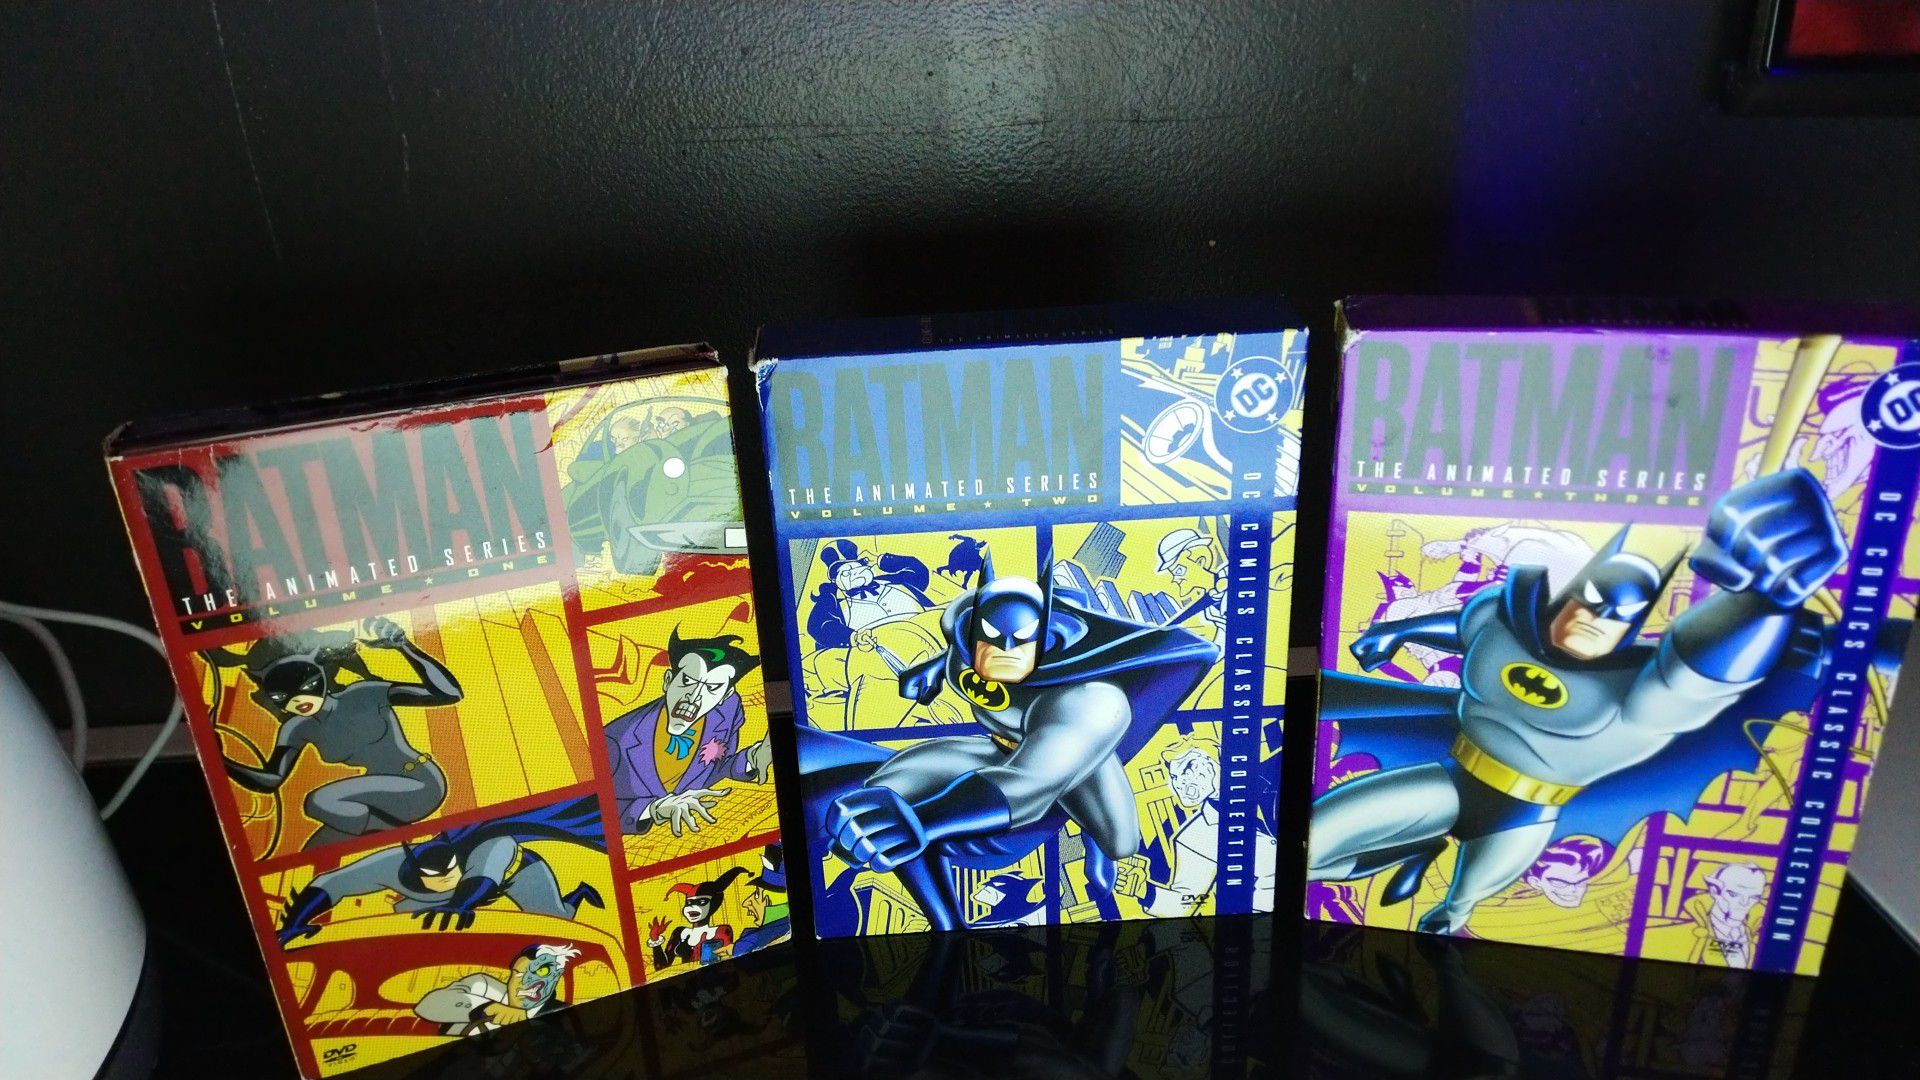 Batman animated series